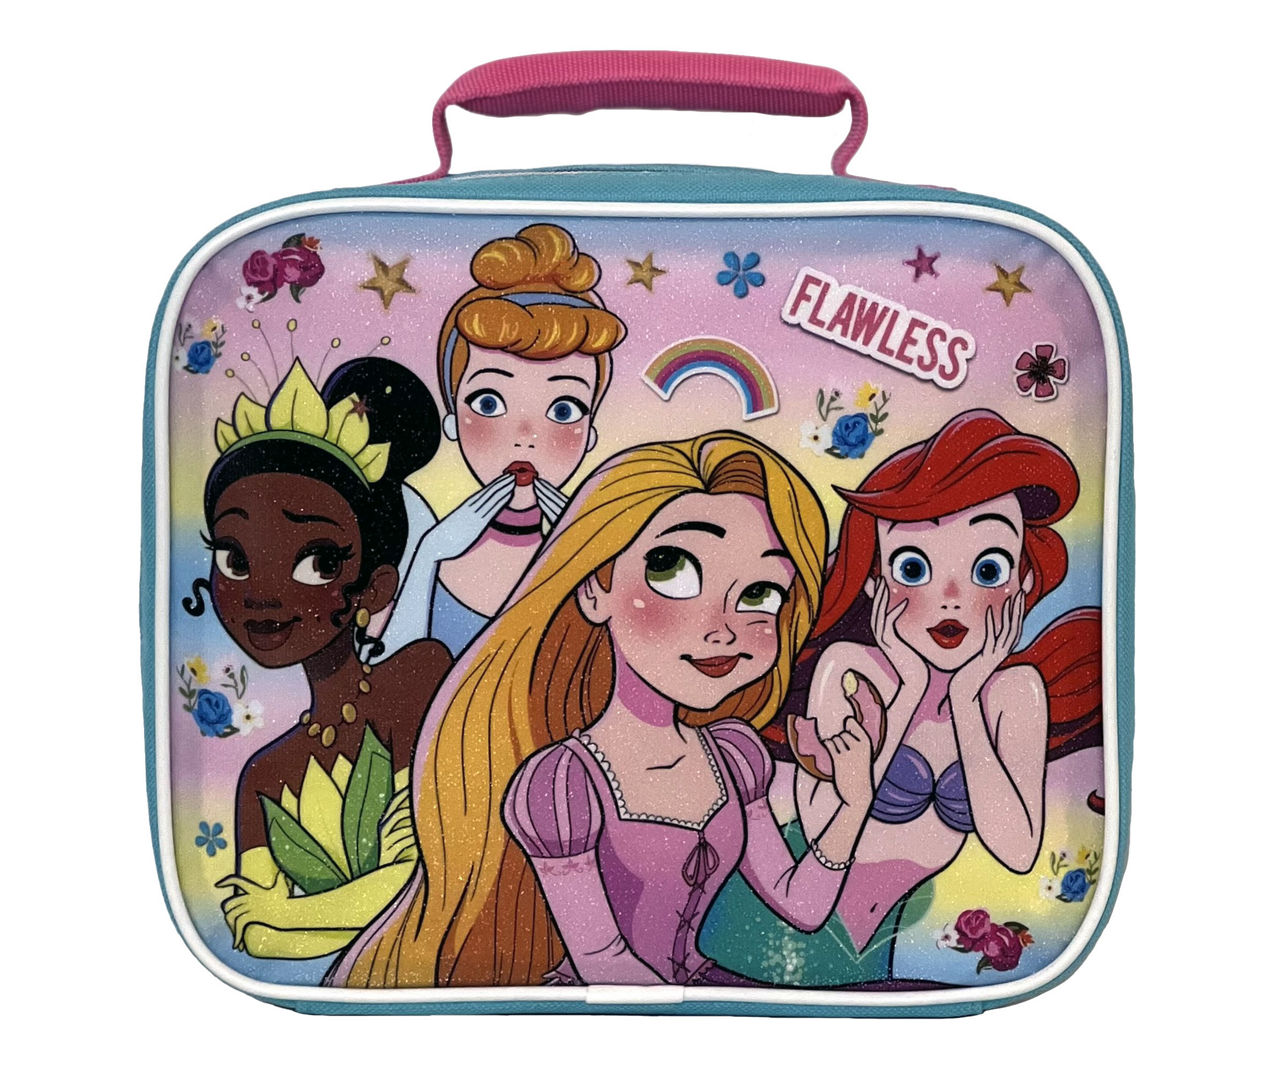 Disney Princess Backpack & Lunch Bag - Big Lots  Disney princess backpack,  Kids lunch bags, Backpack lunch bag